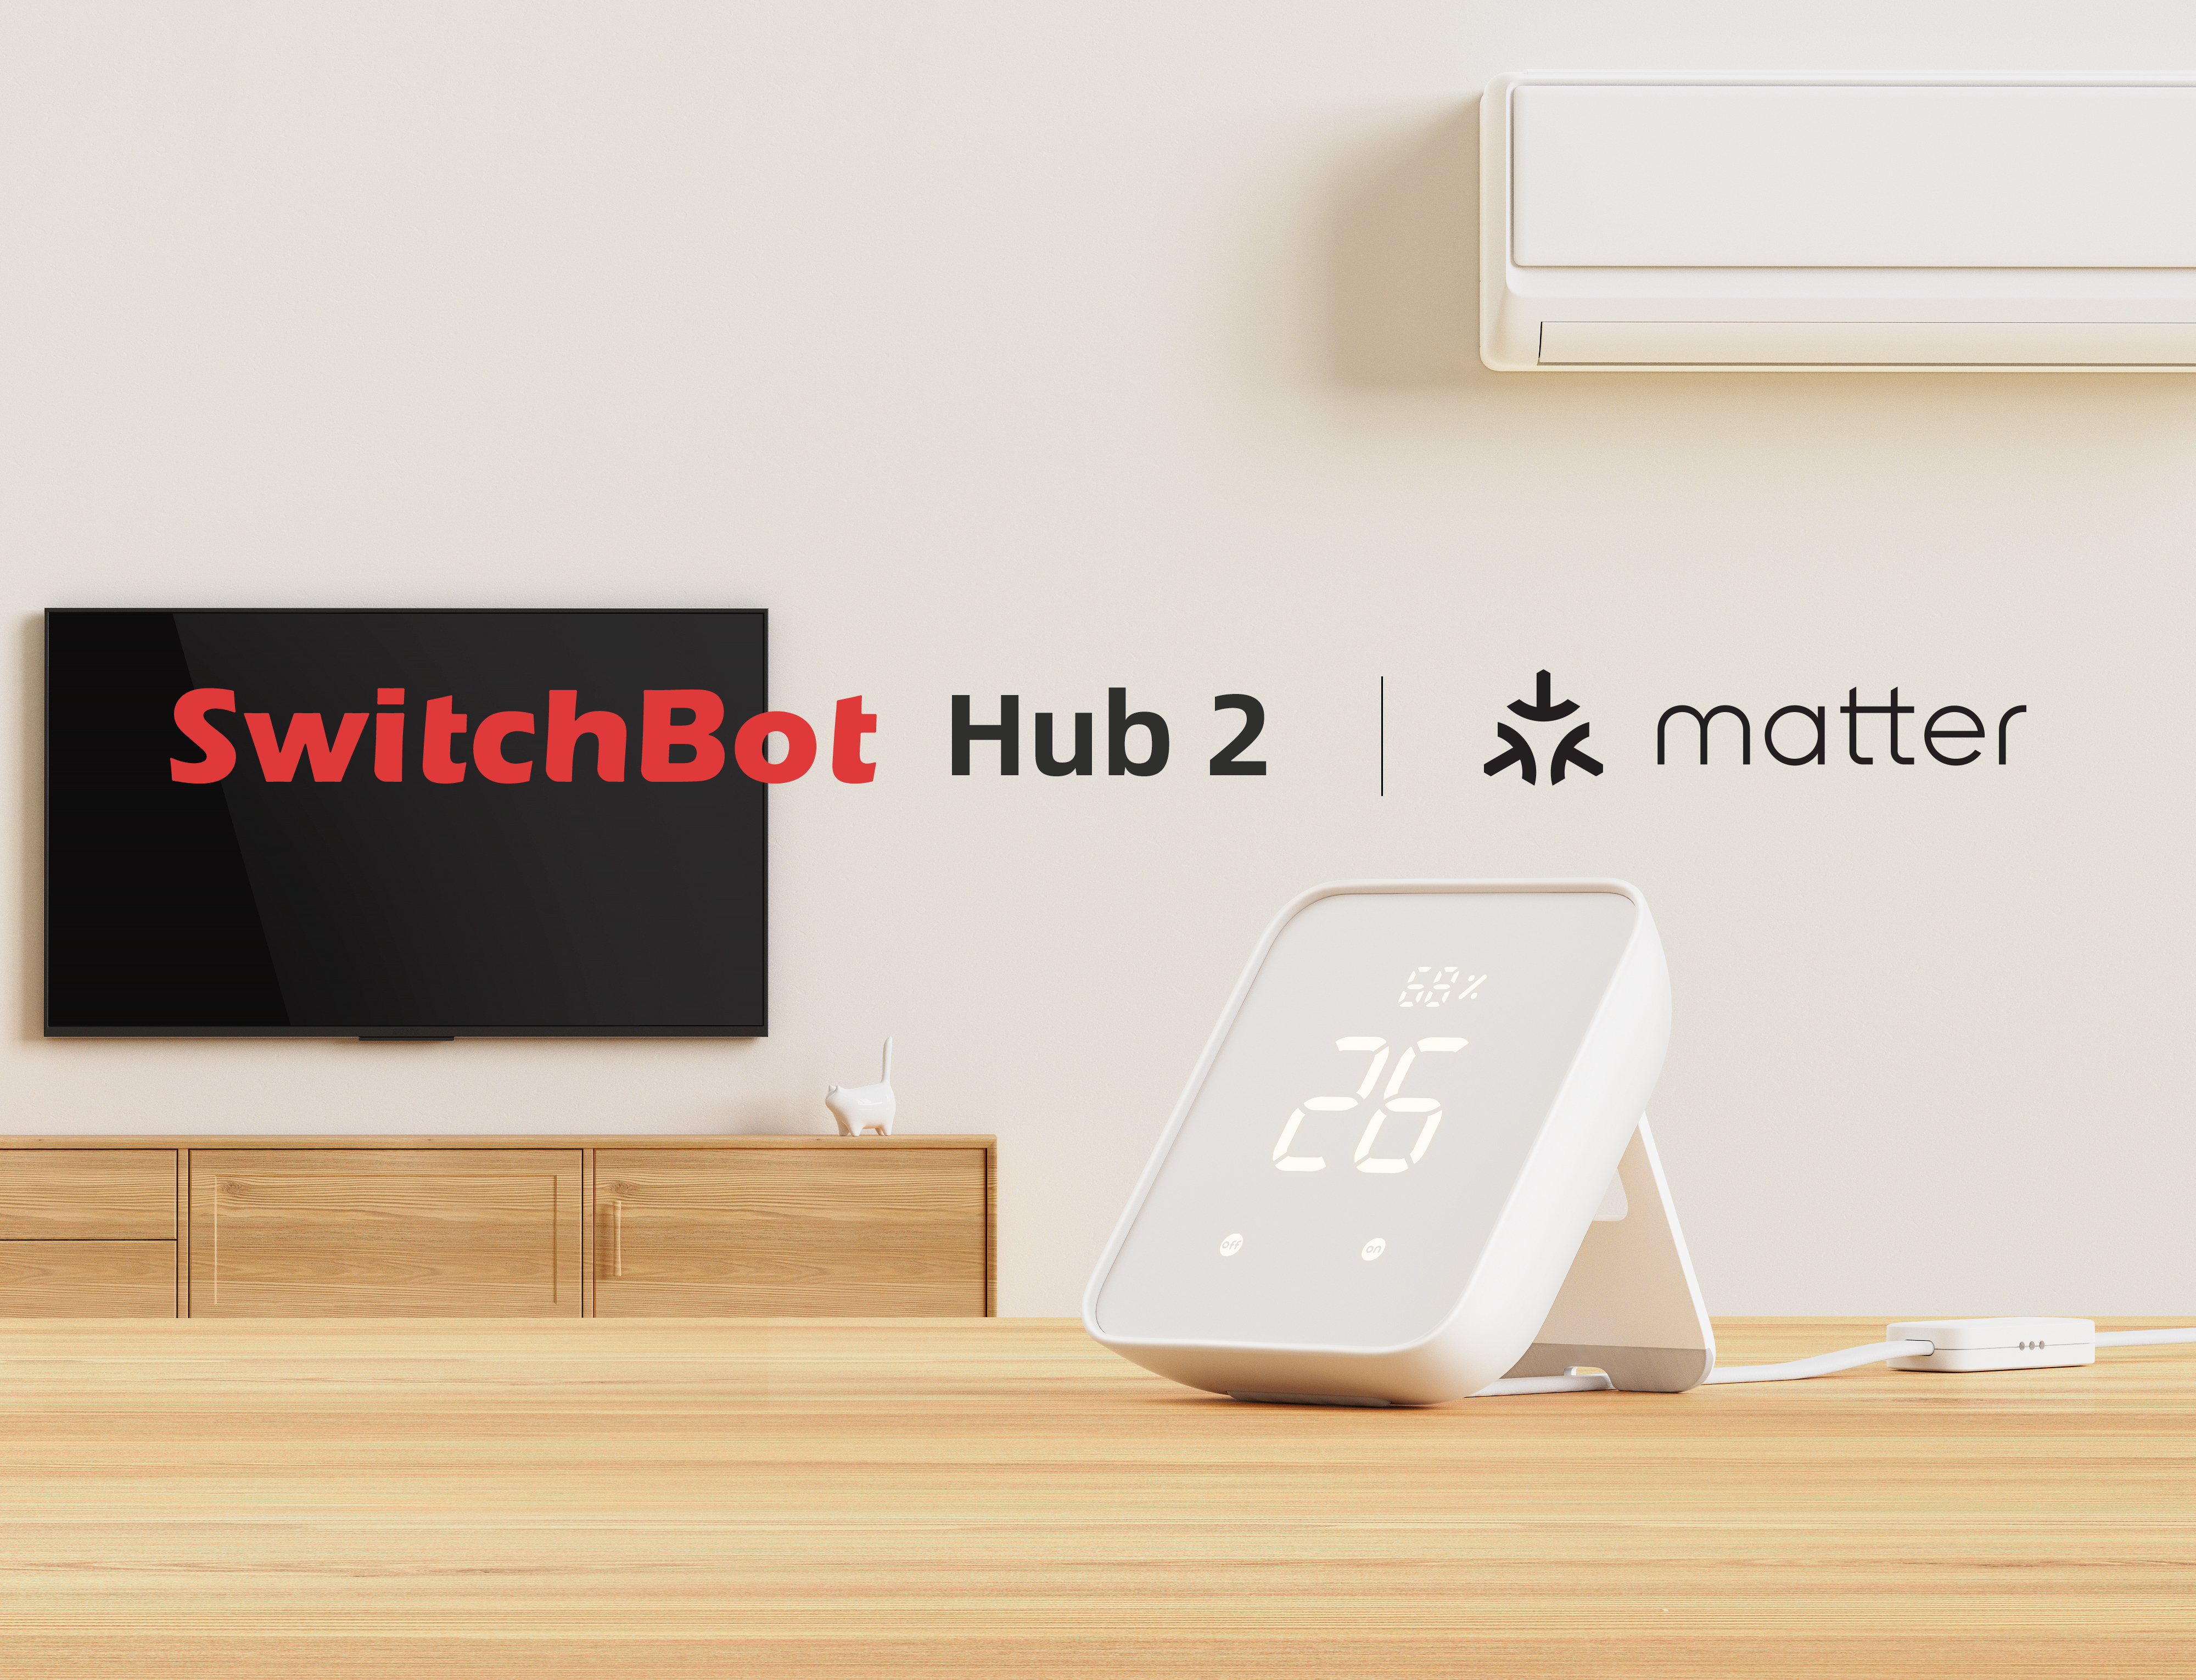 SwitchBot Hub 2 Matter support